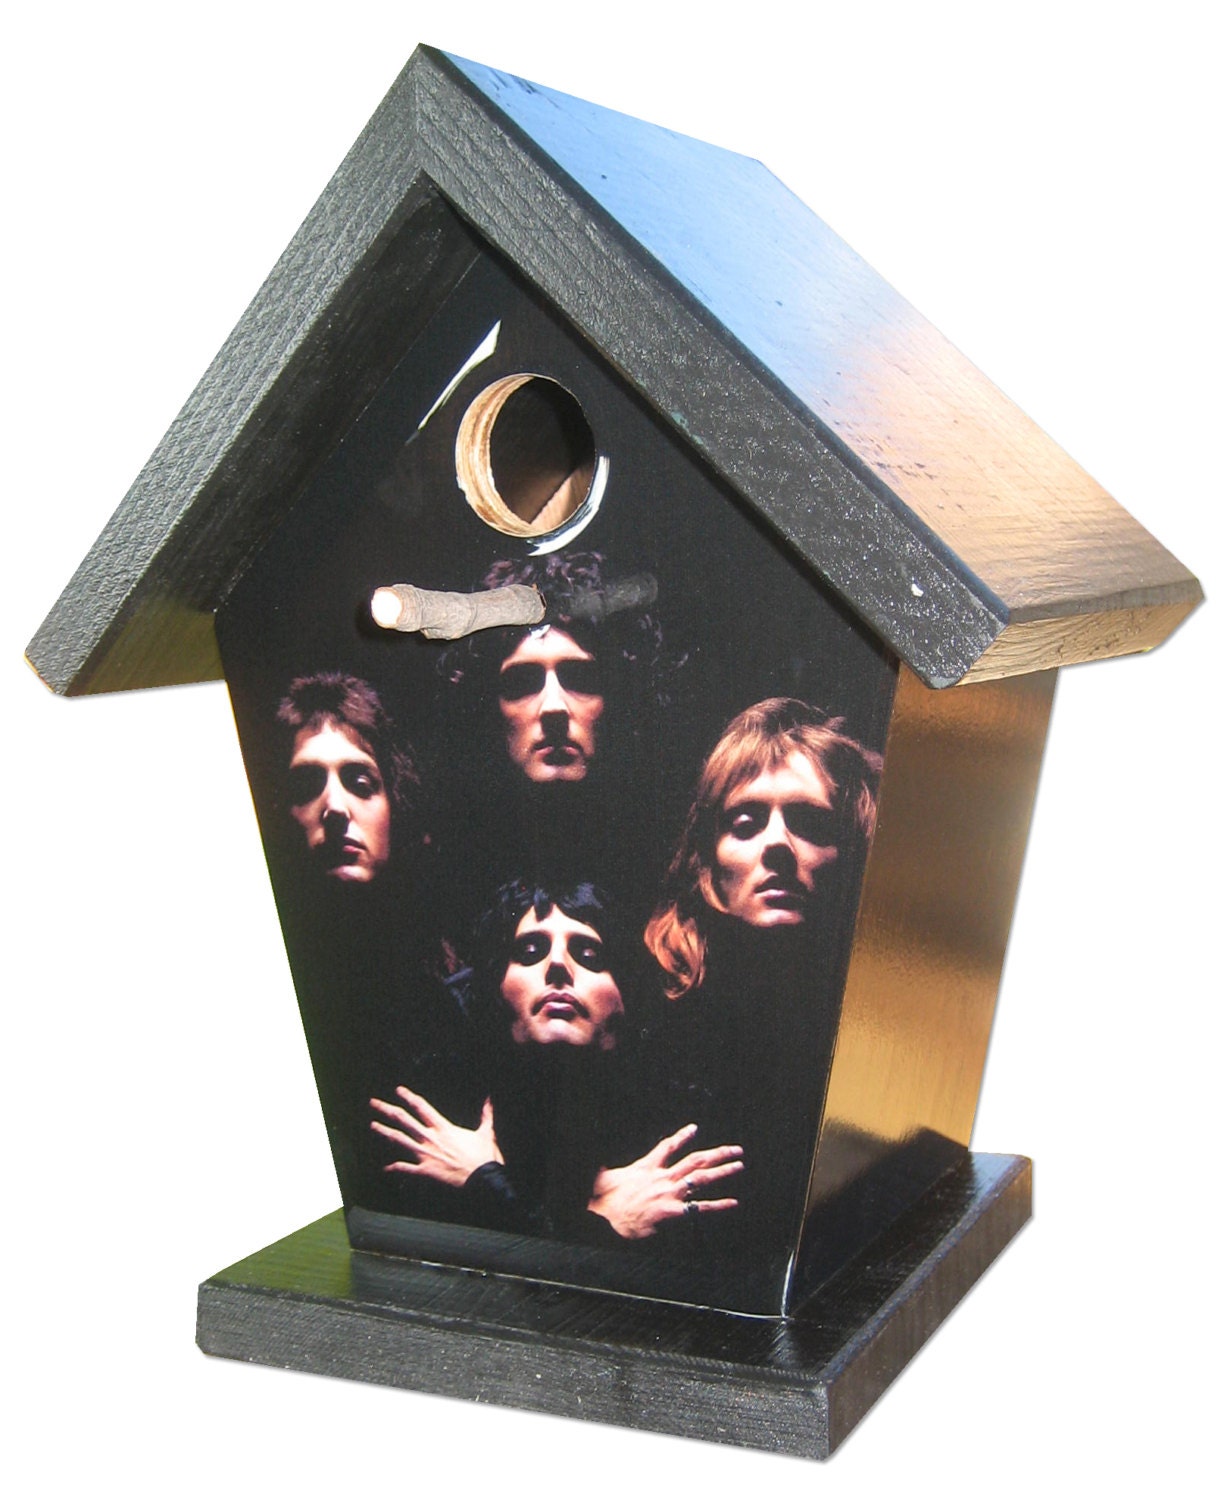 Queen Bohemian Rhapsody Birdhouse/Feeder